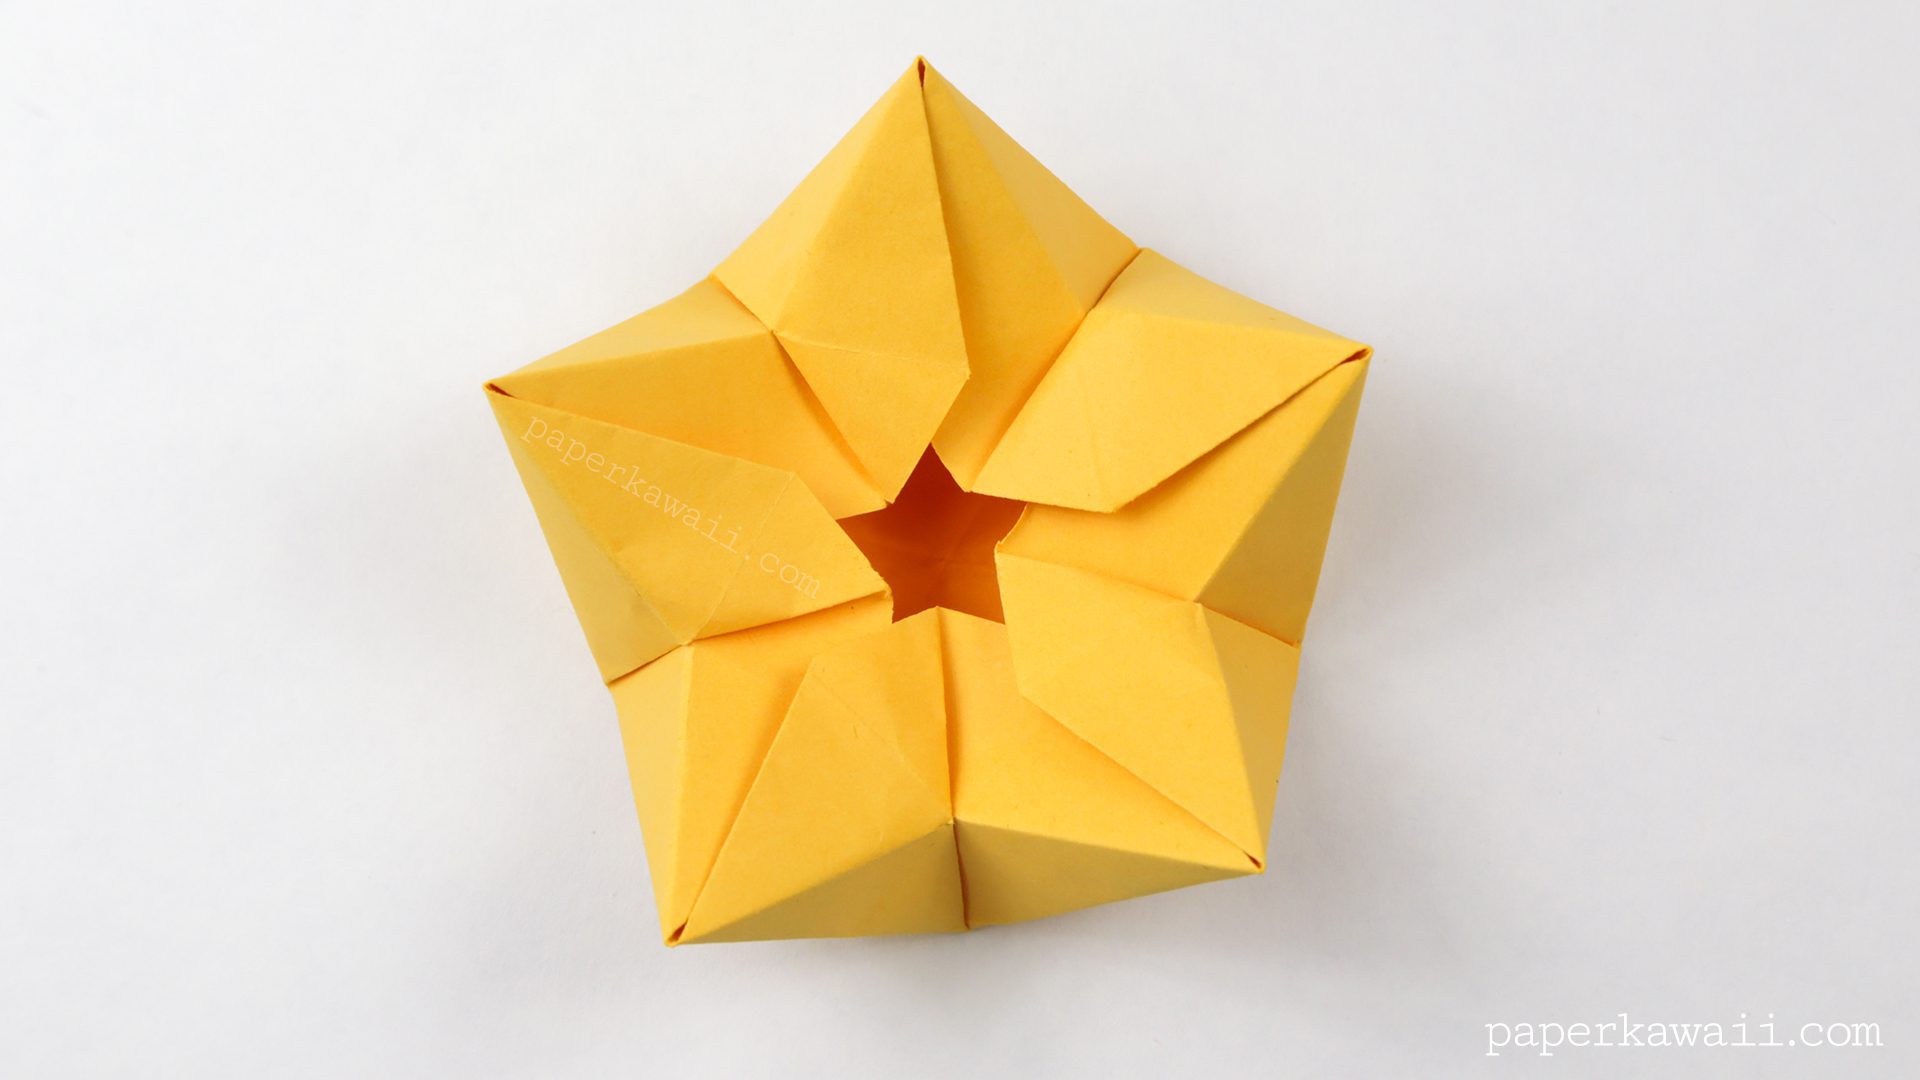 origami star flower crown tutorial #origami #diy #flower #crown #star #bowl